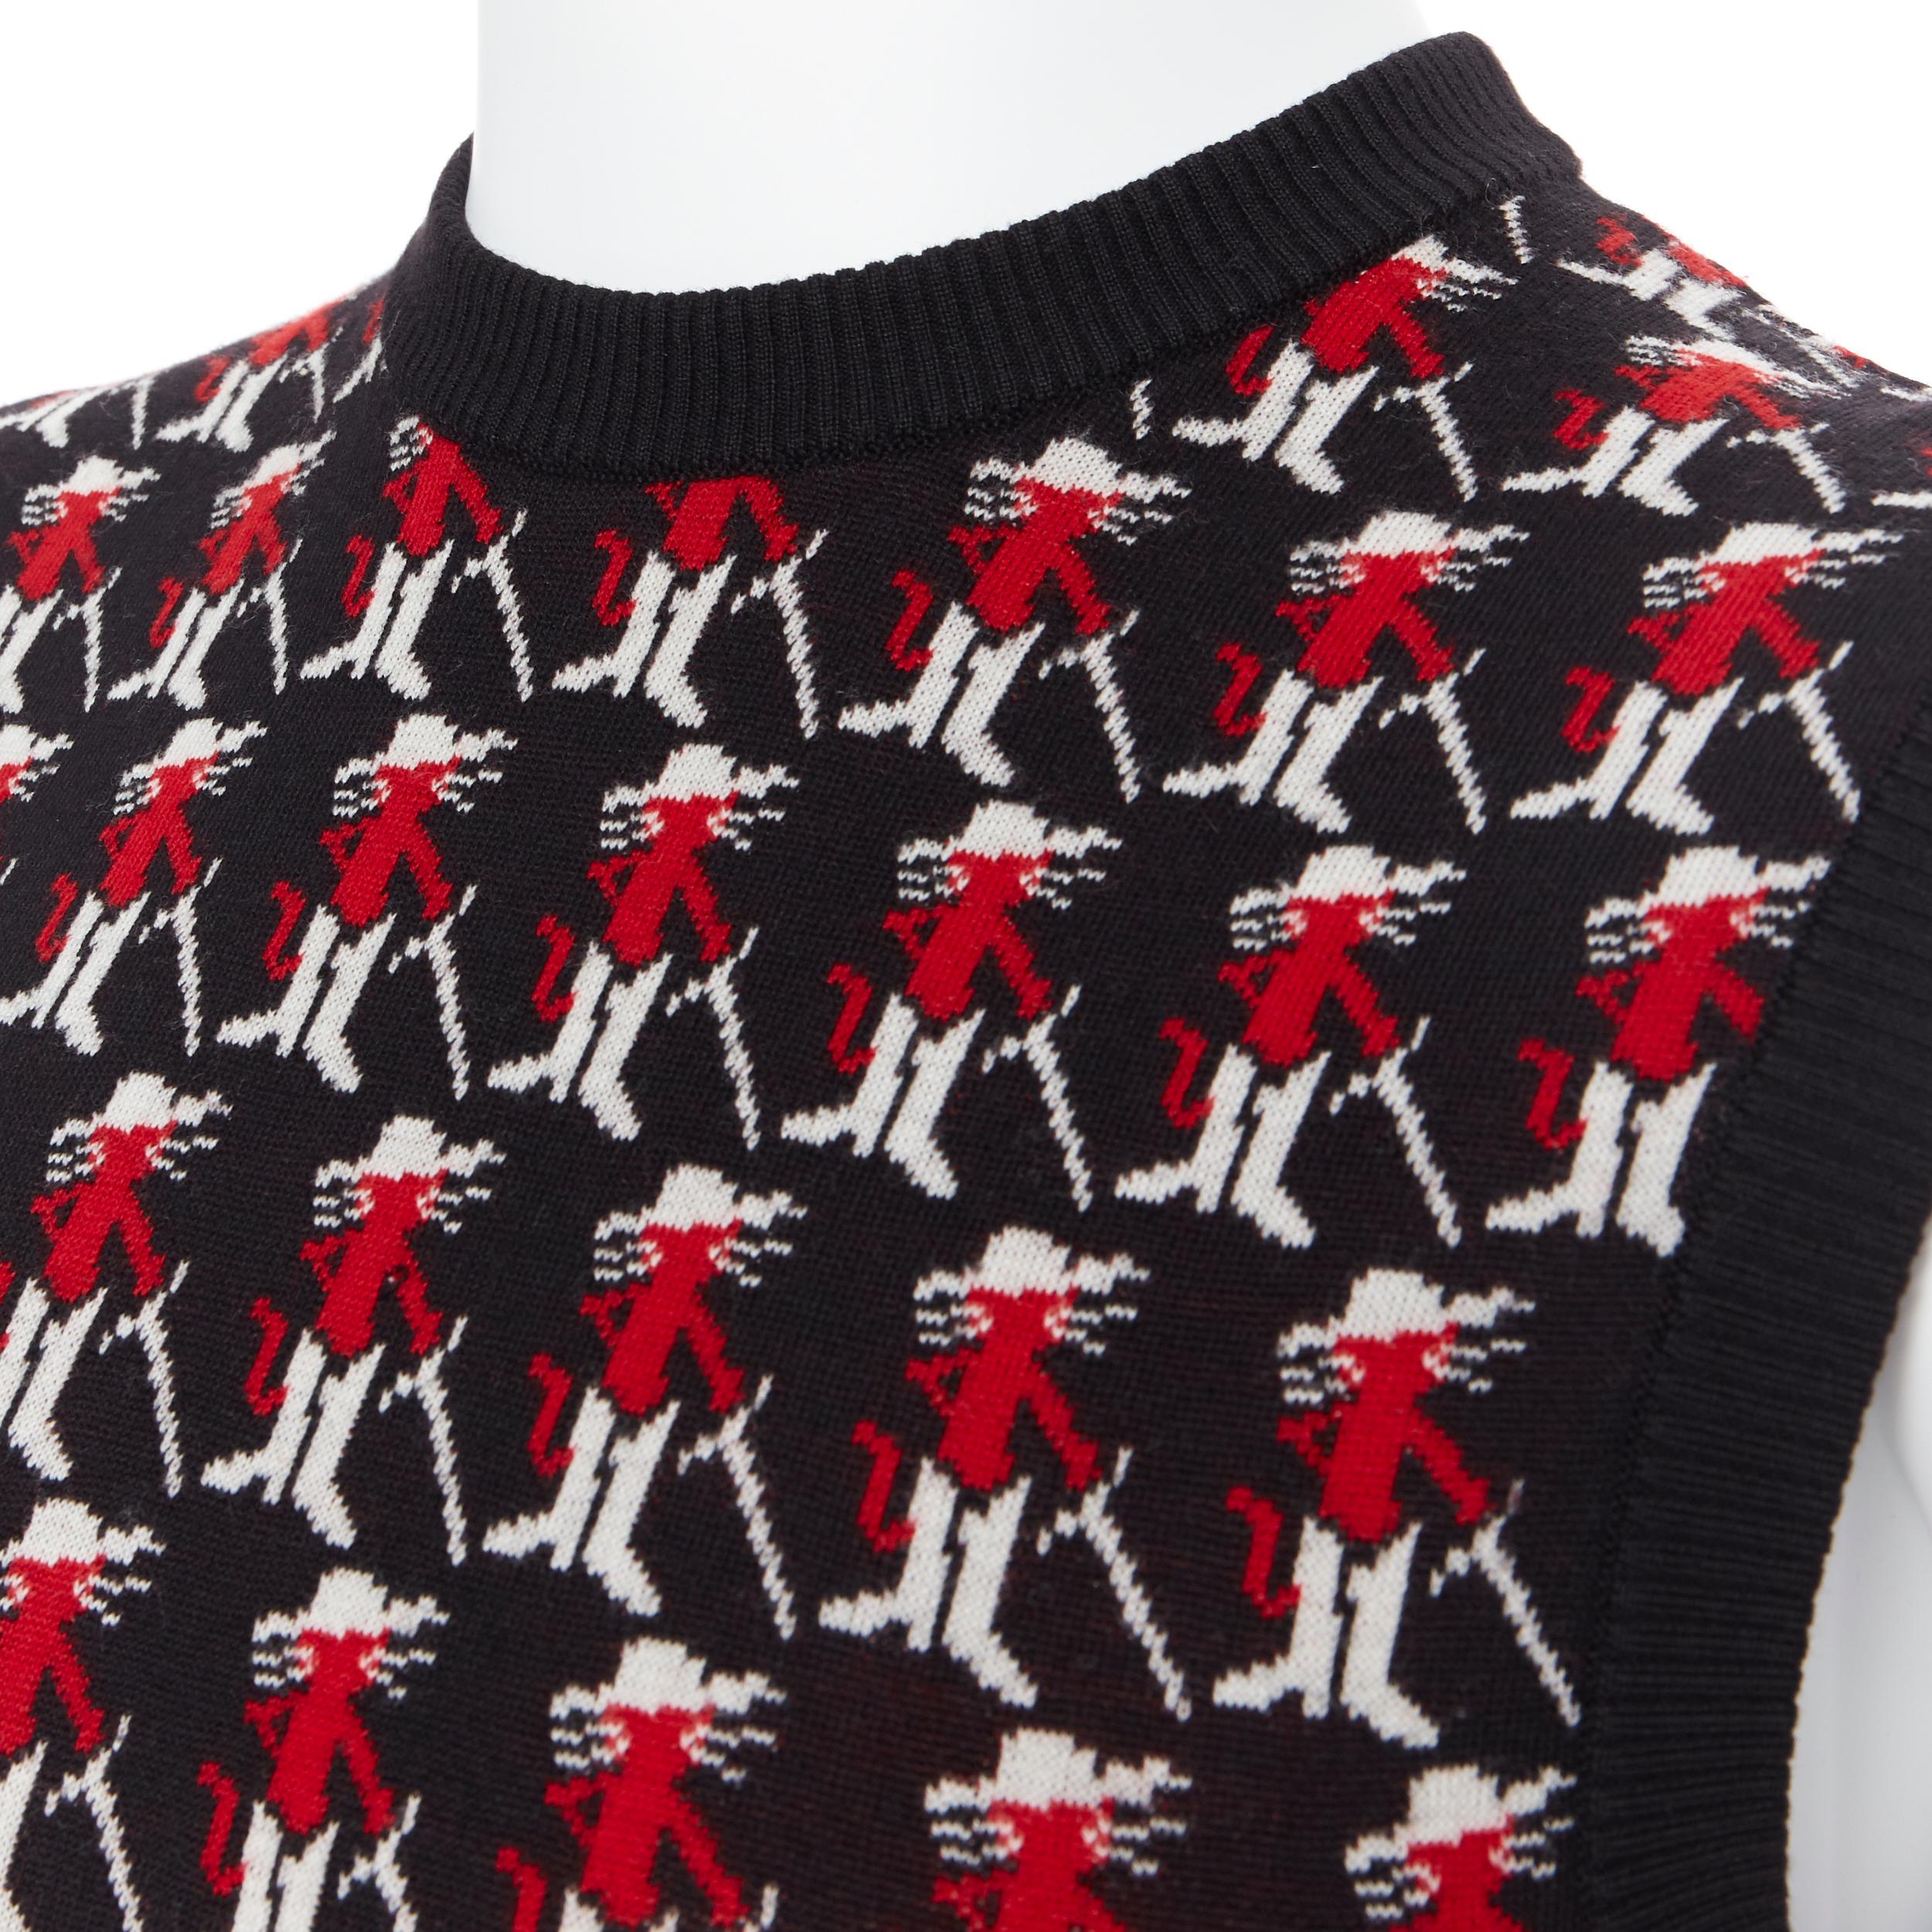 RAF SIMONS 100% merino wool red figurine knitted sleeveless sweater vest S
Brand: Raf Simons
Designer: Raf Simons
Model Name / Style: Sweater vest
Material: Wool; merino wool
Color: Black
Pattern: Other; red figurine
Extra Detail: Sleeveless. V-neck